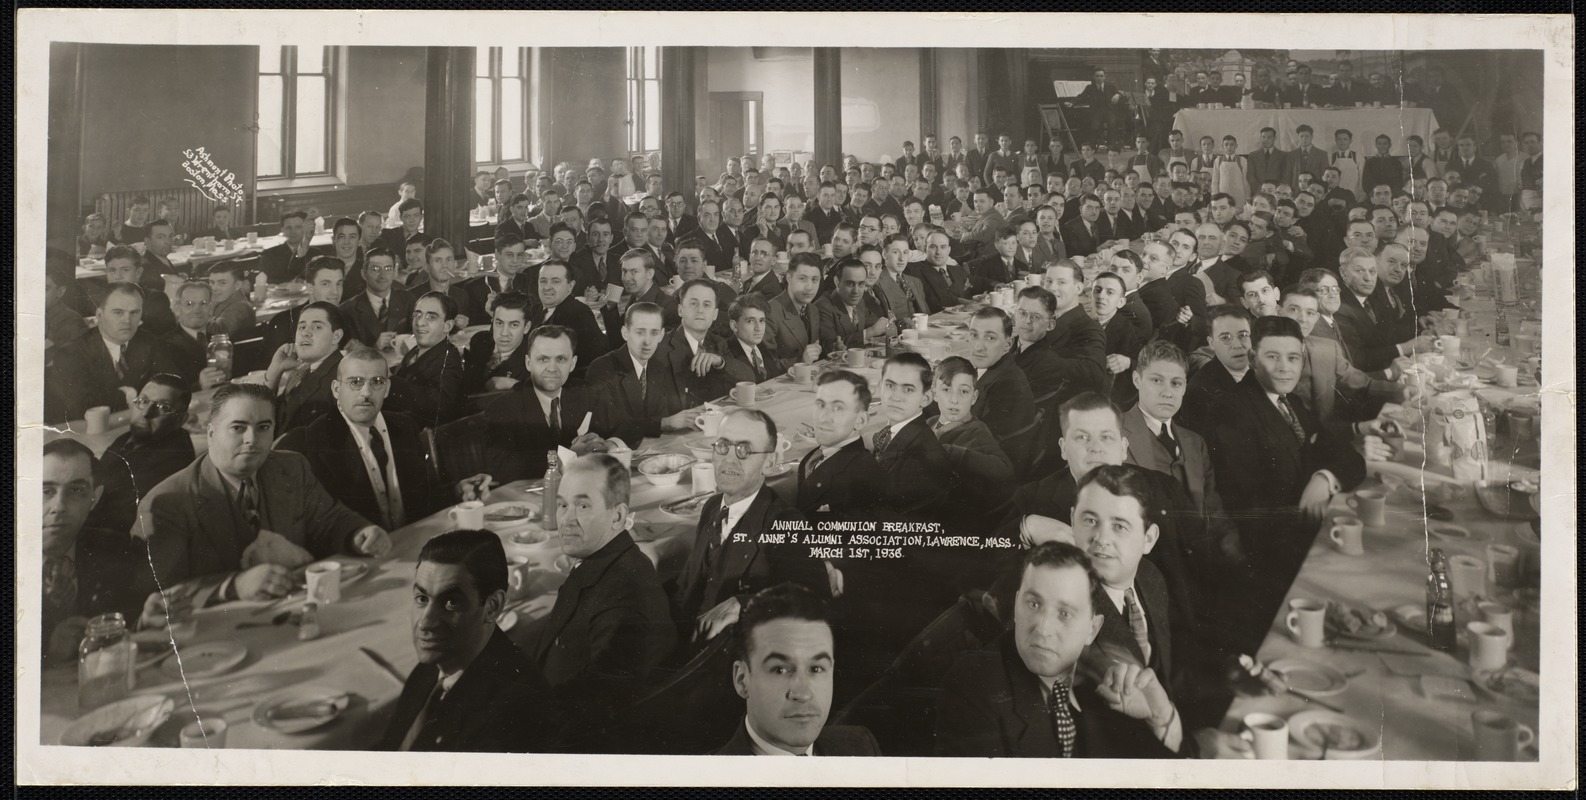 Annual communion breakfast, St. Anne's alumni association, Lawrence, Massachusetts, March 1st, 1936